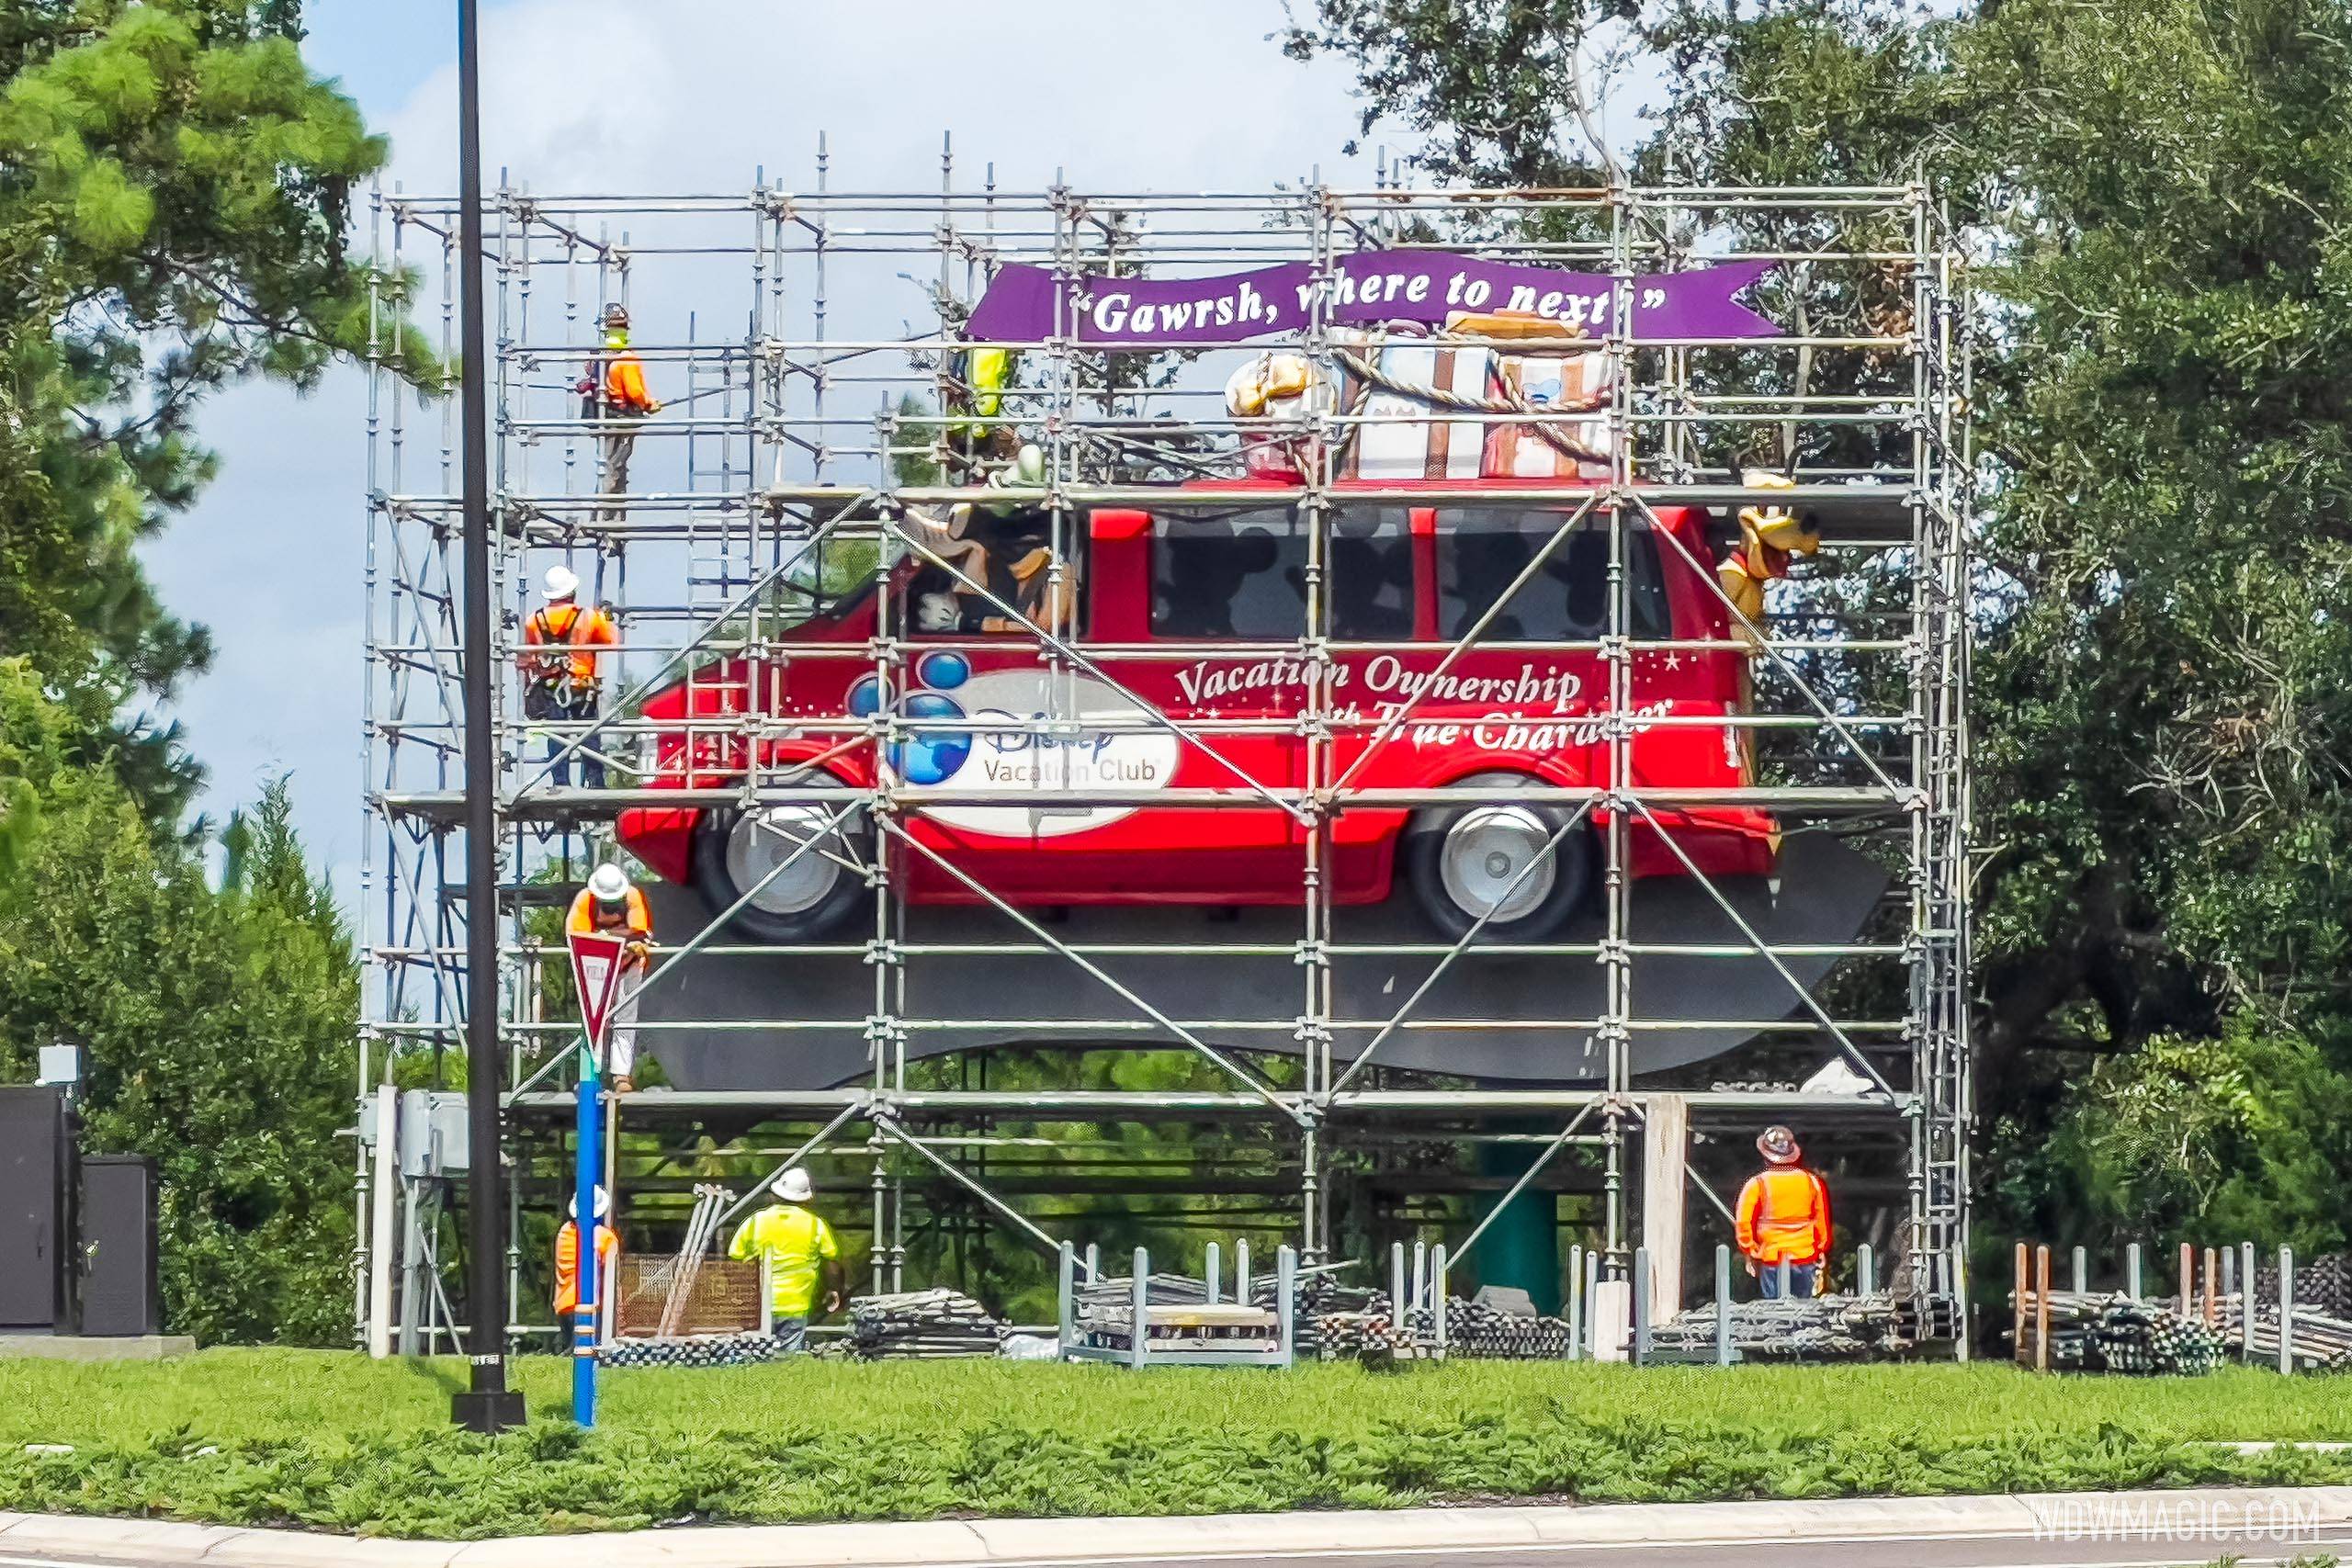 Disney Vacation Club billboard wrapped in scaffolding for refurbishment